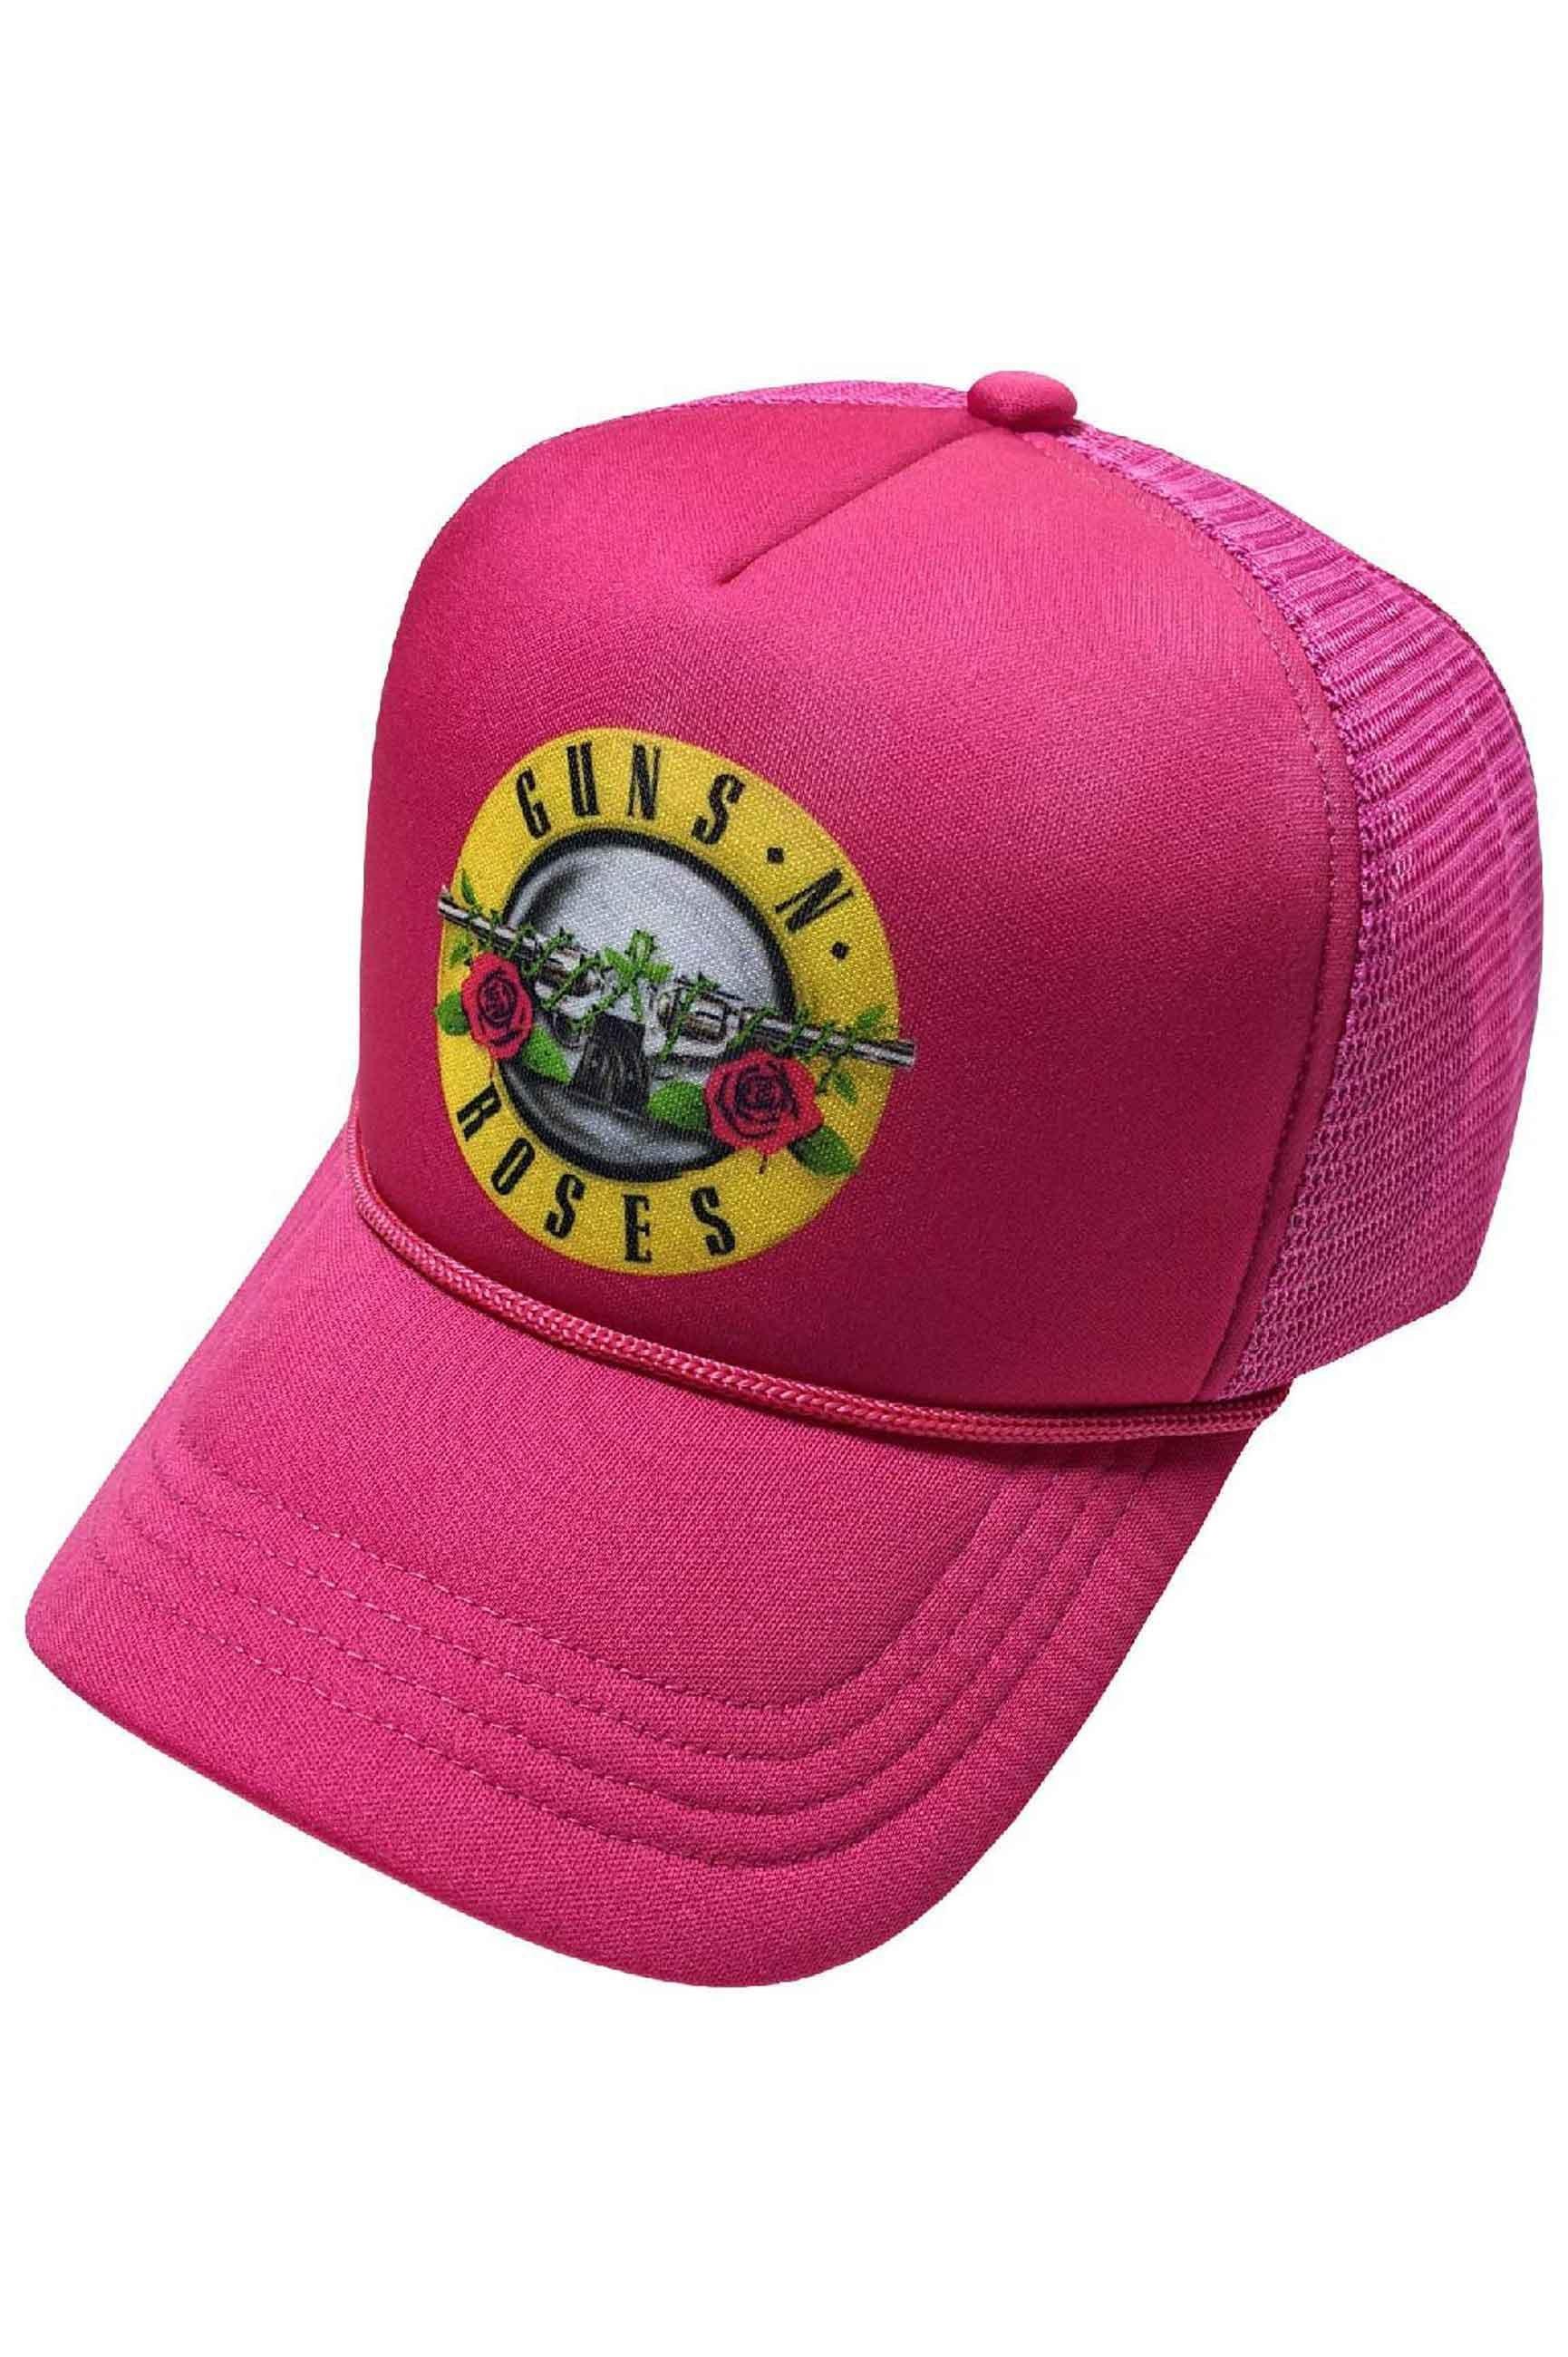 Бейсболка Trucker Classic Band с логотипом Guns N Roses, розовый 1 шт унисекс сетчатая кепка утконос на весну лето многоцветный